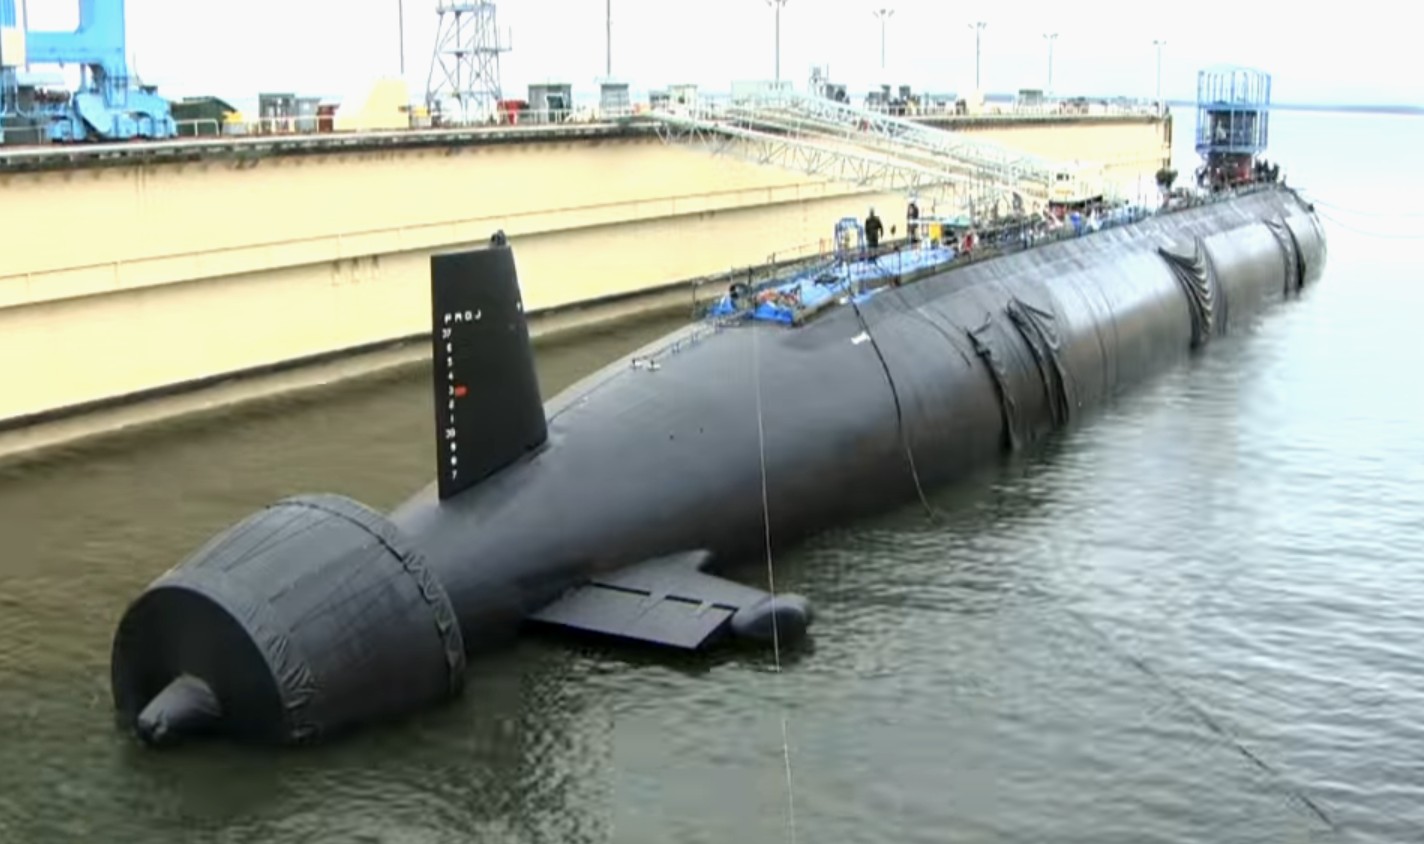 ssn-787 uss washington virginia class attack submarine us navy 28 launching newport news